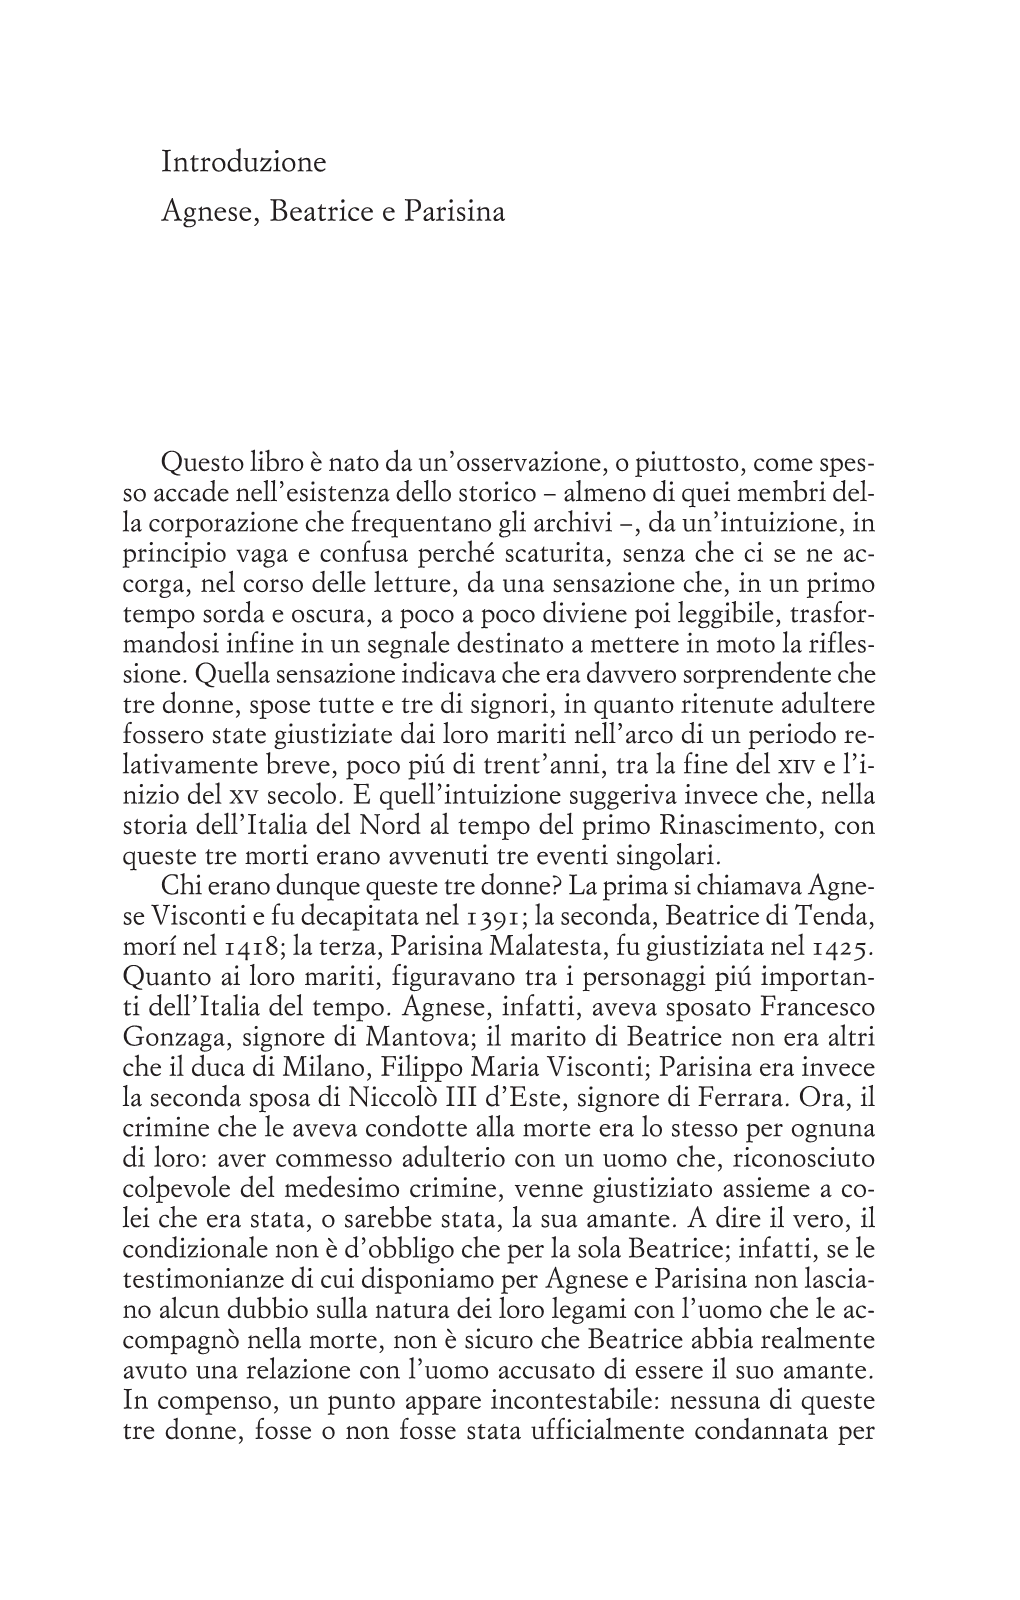 Introduzione Agnese, Beatrice E Parisina